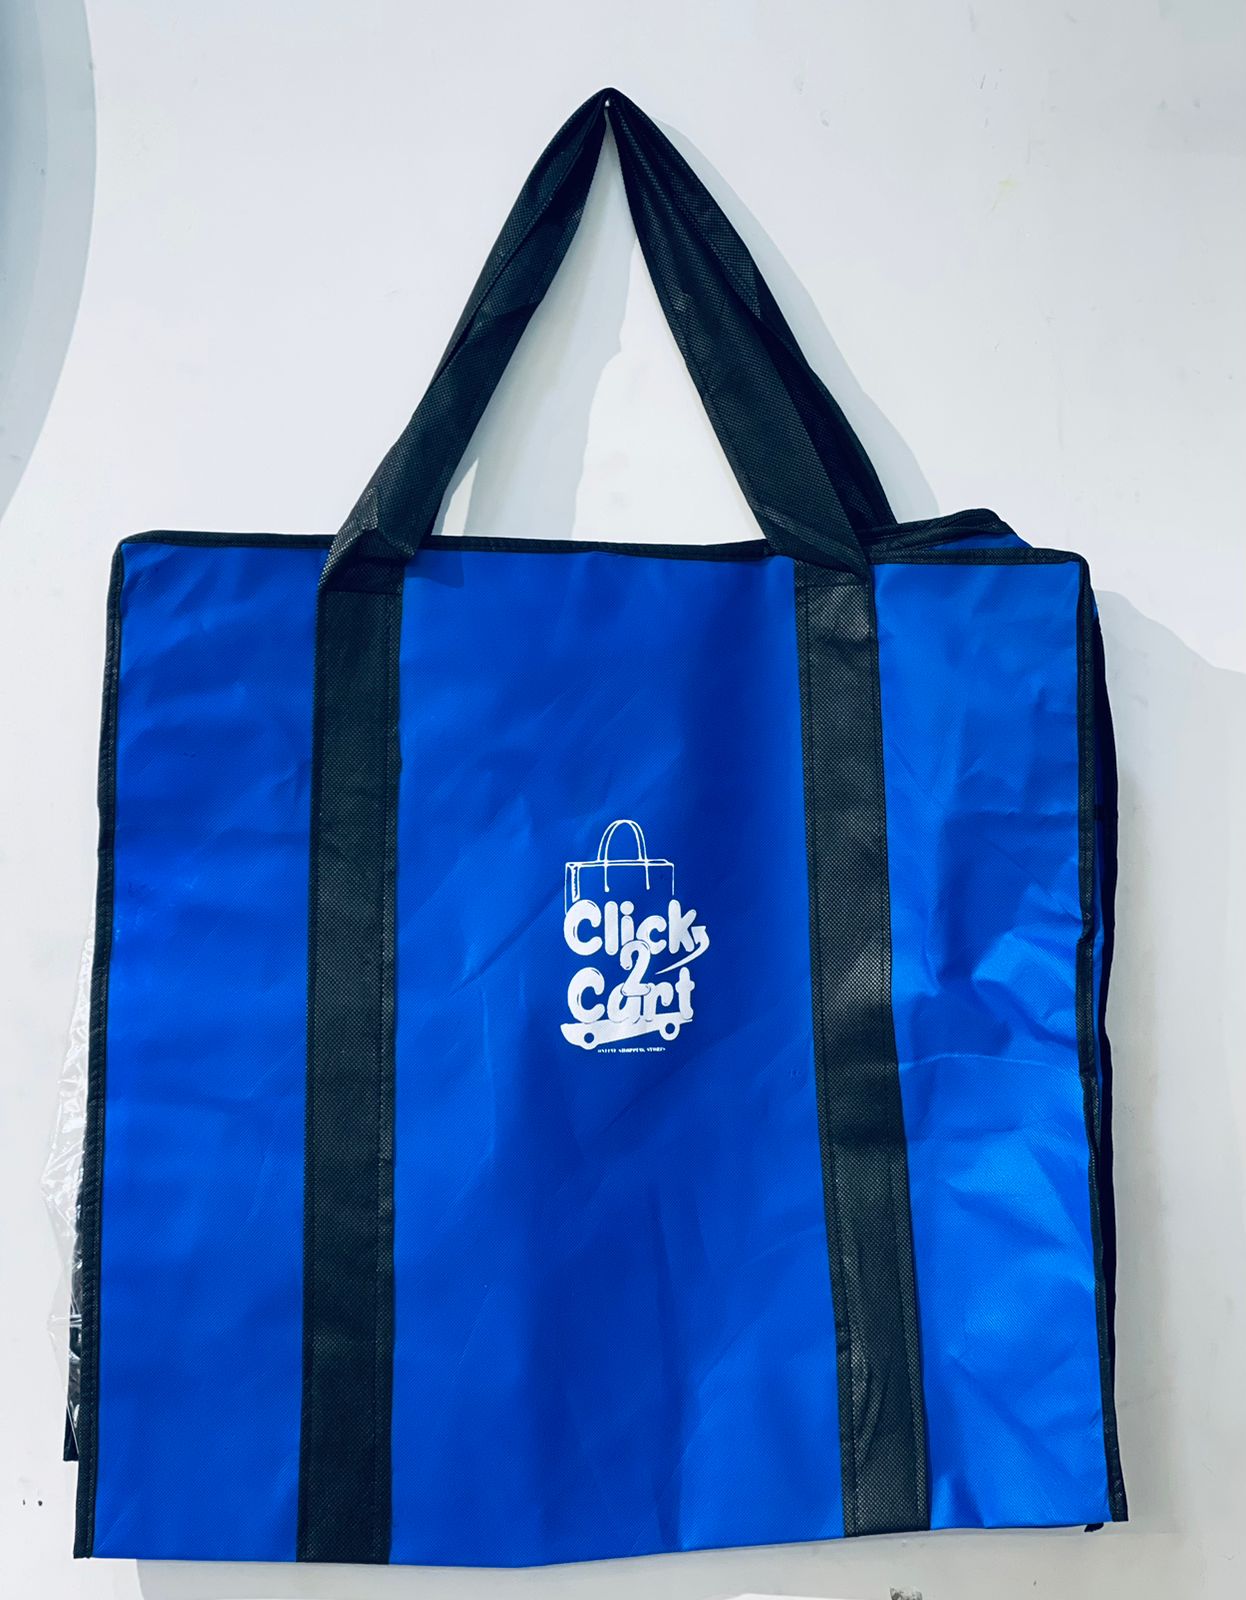 110GSM Cloths Storage Bag (3pcs)